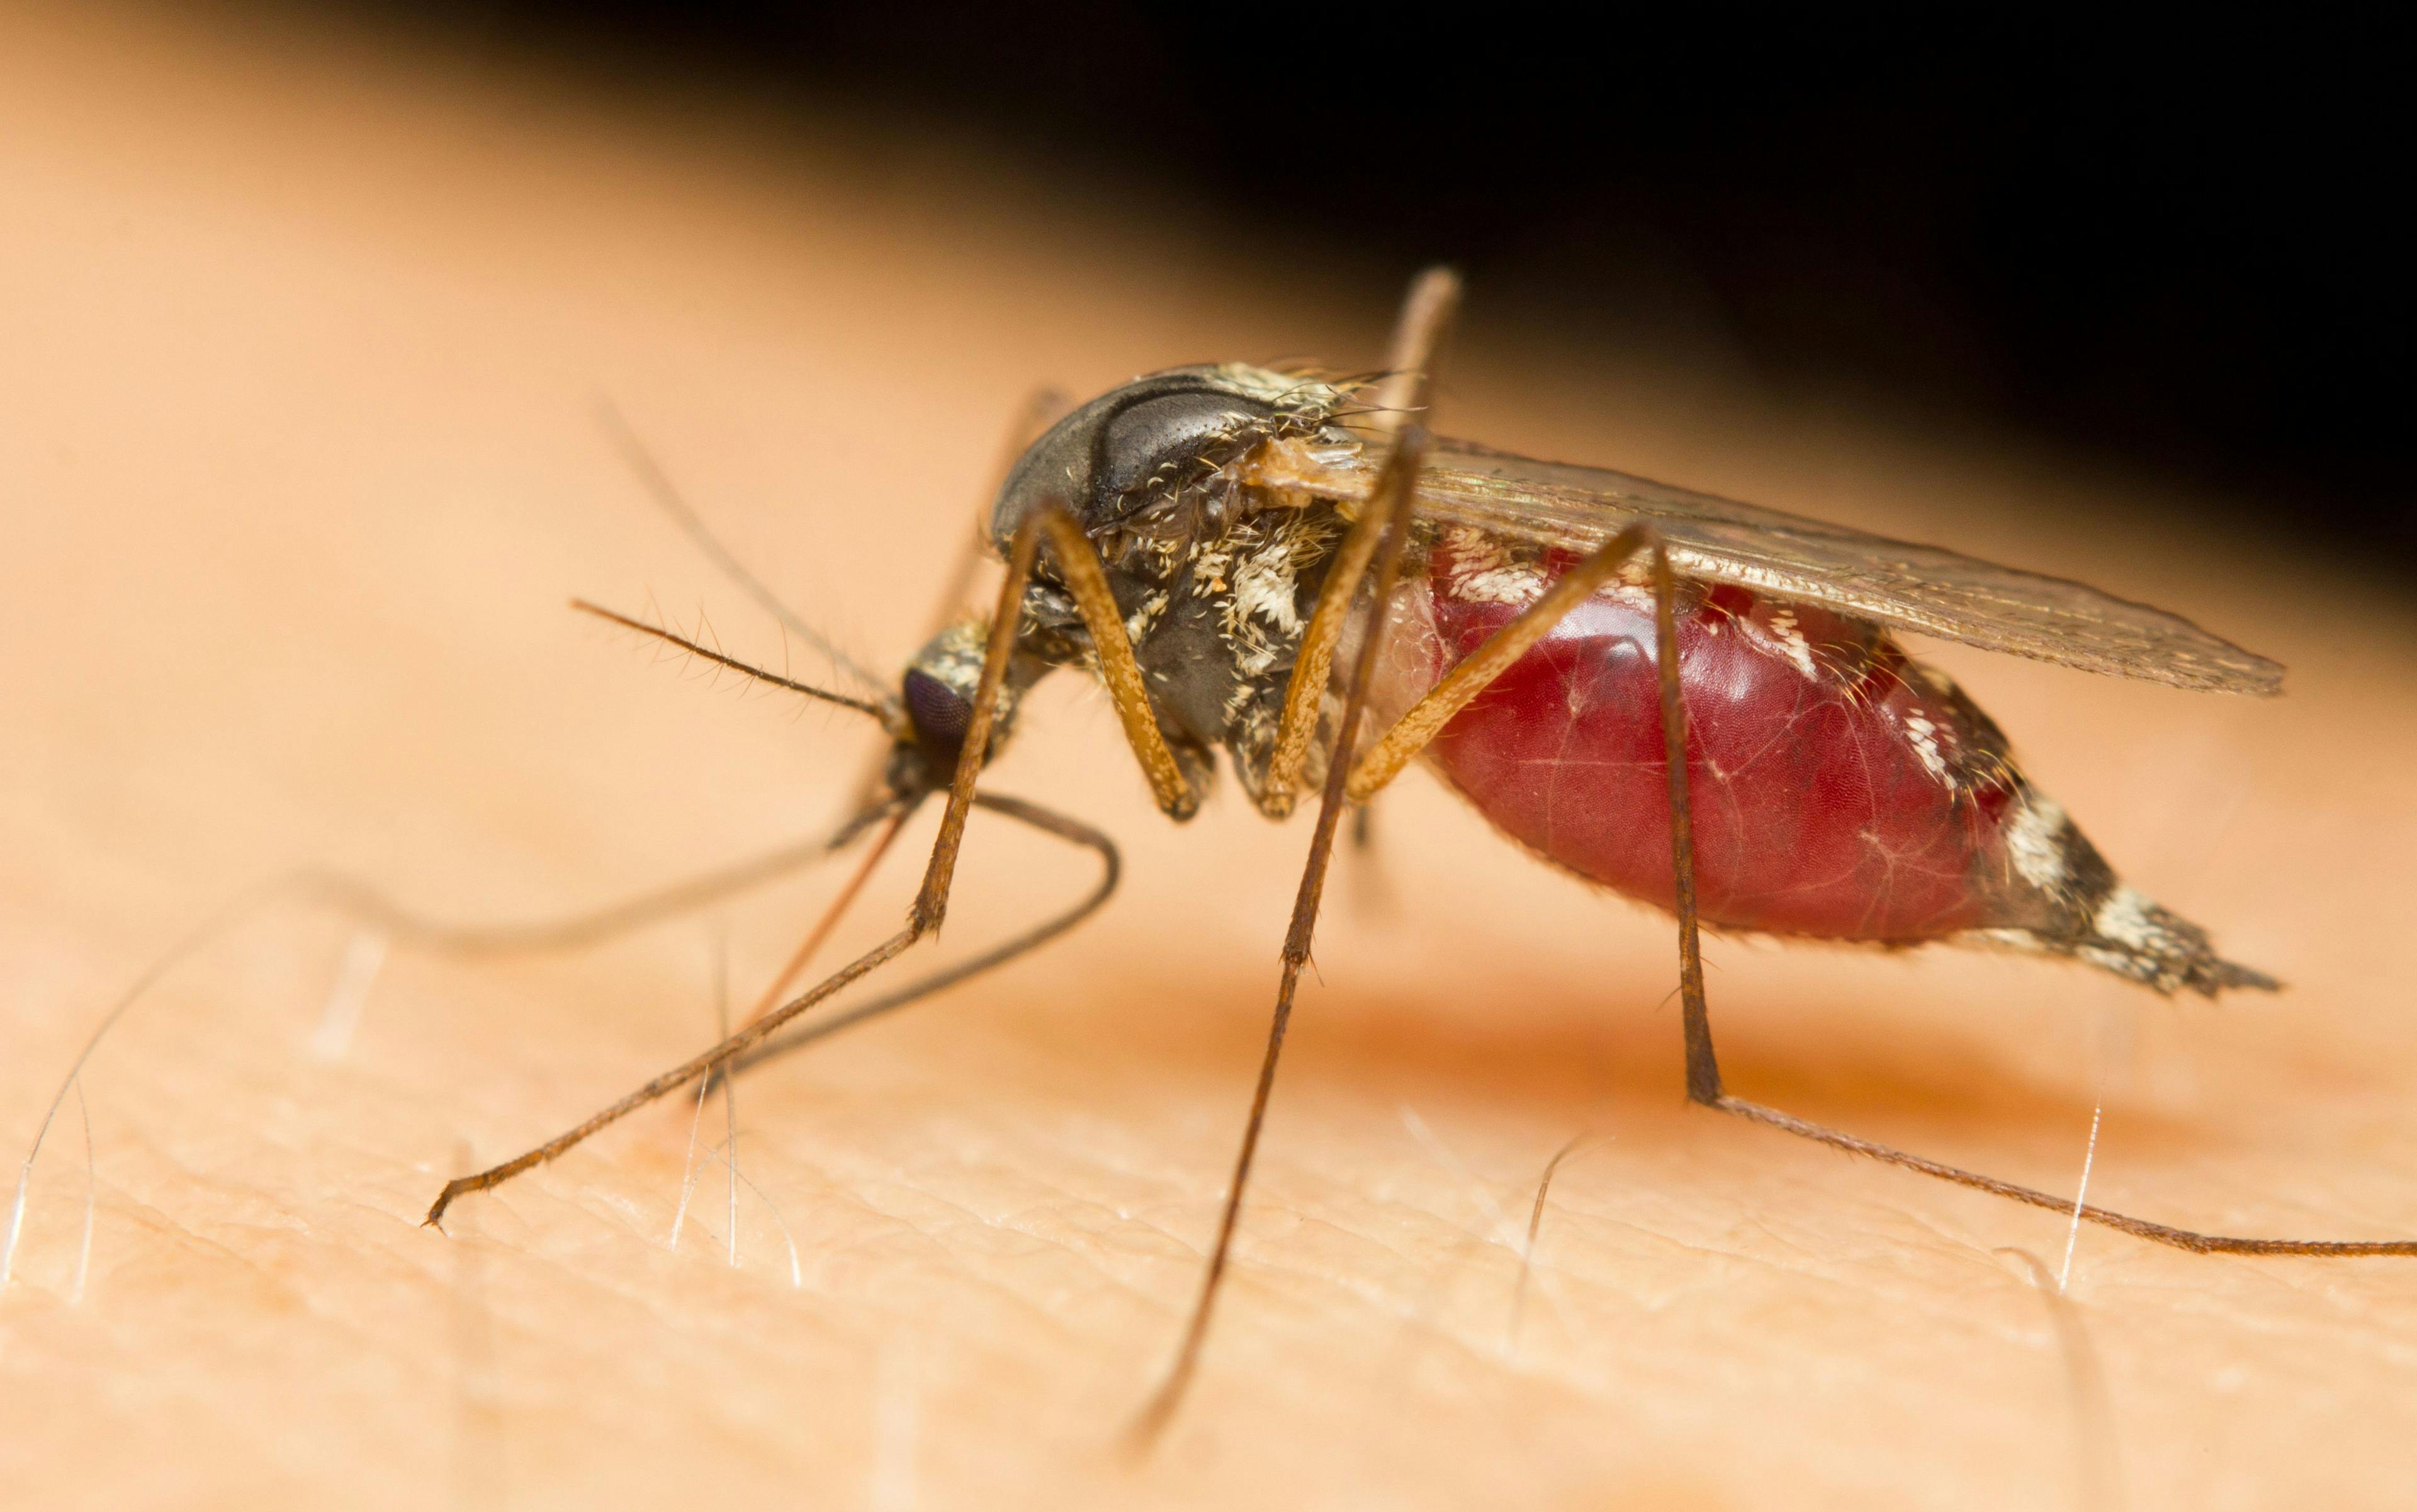 Mosquito sucking blood -- Image credit: corlaffra | stock.adobe.com